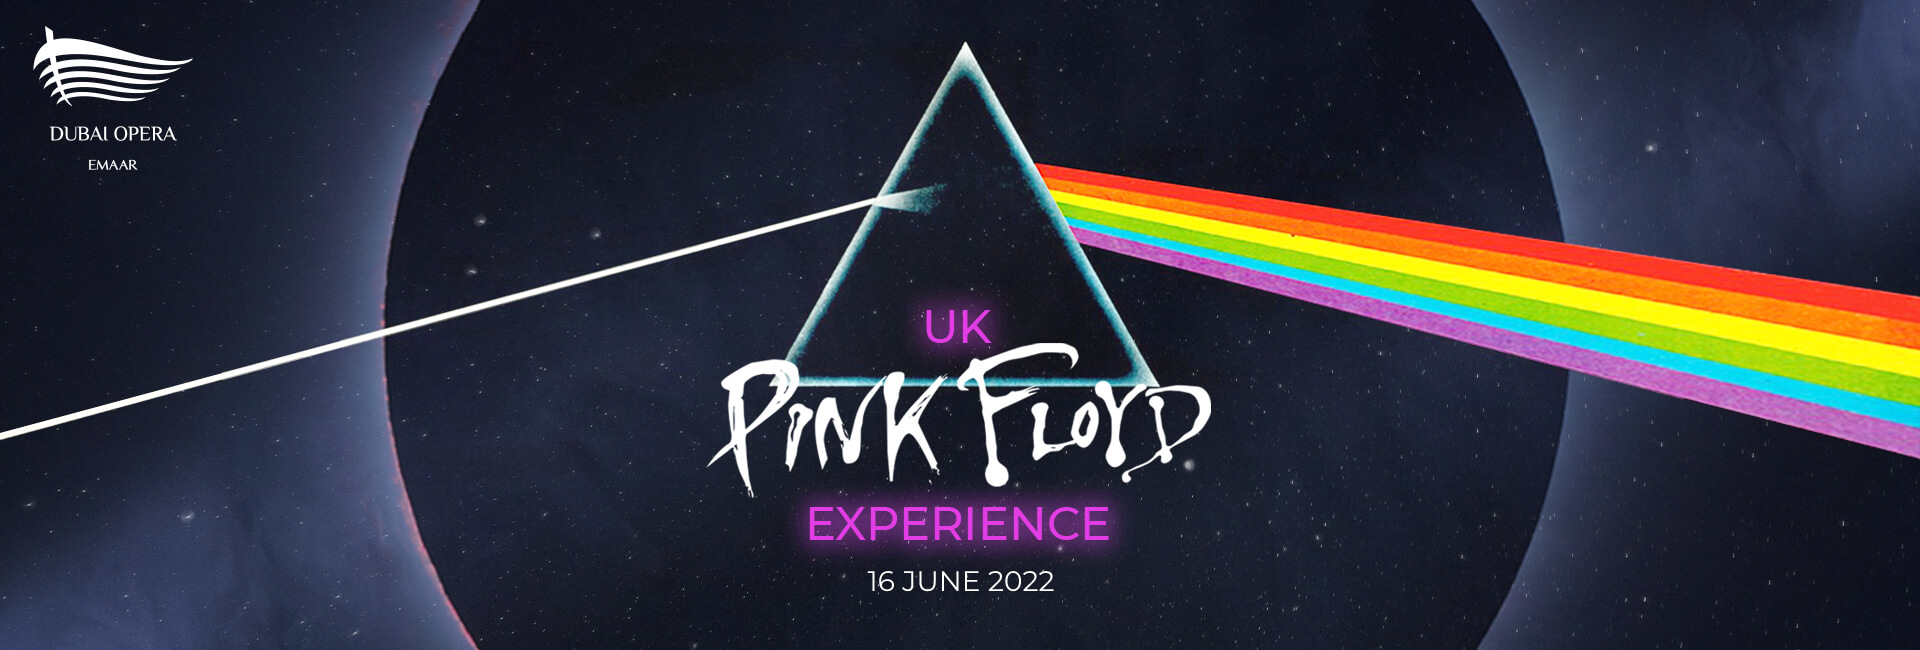 The UK Pink Floyd Experience - Dubai Opera shows 2022